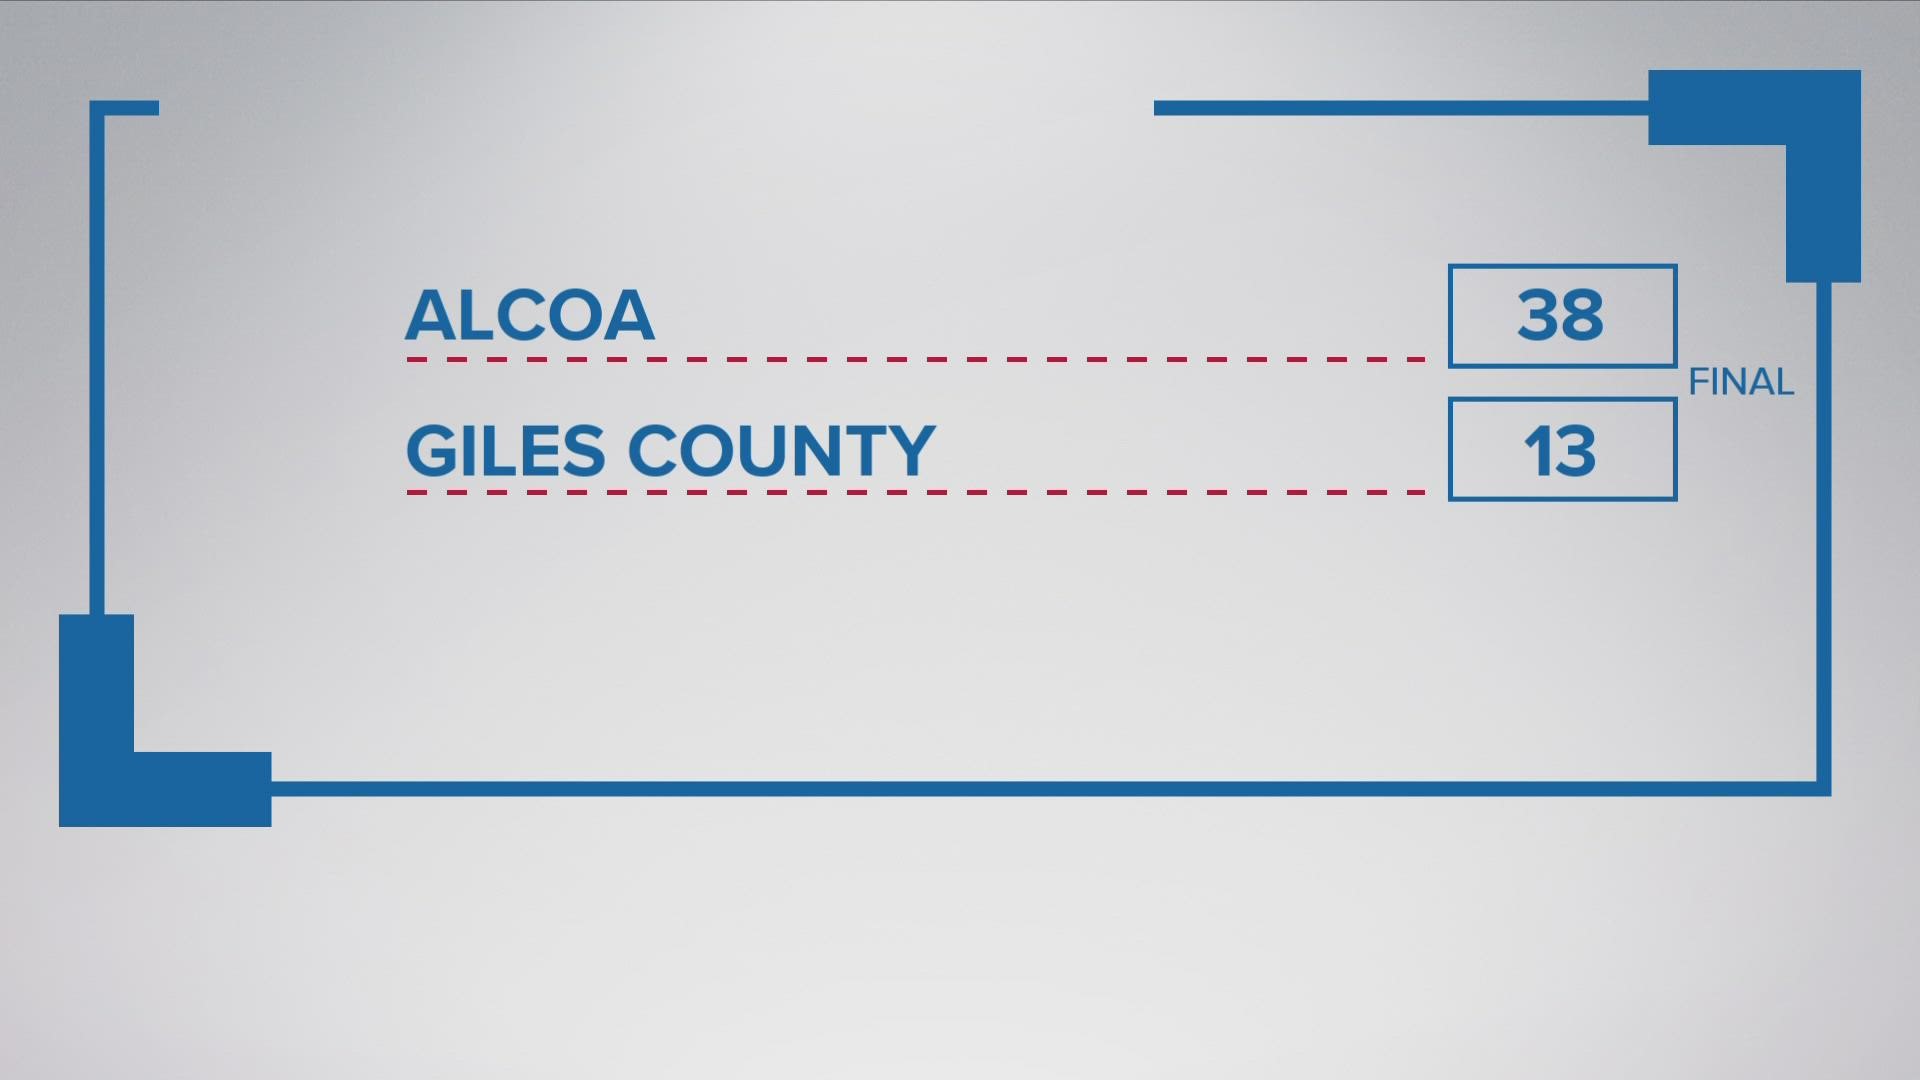 Alcoa beats Giles County 38-13.